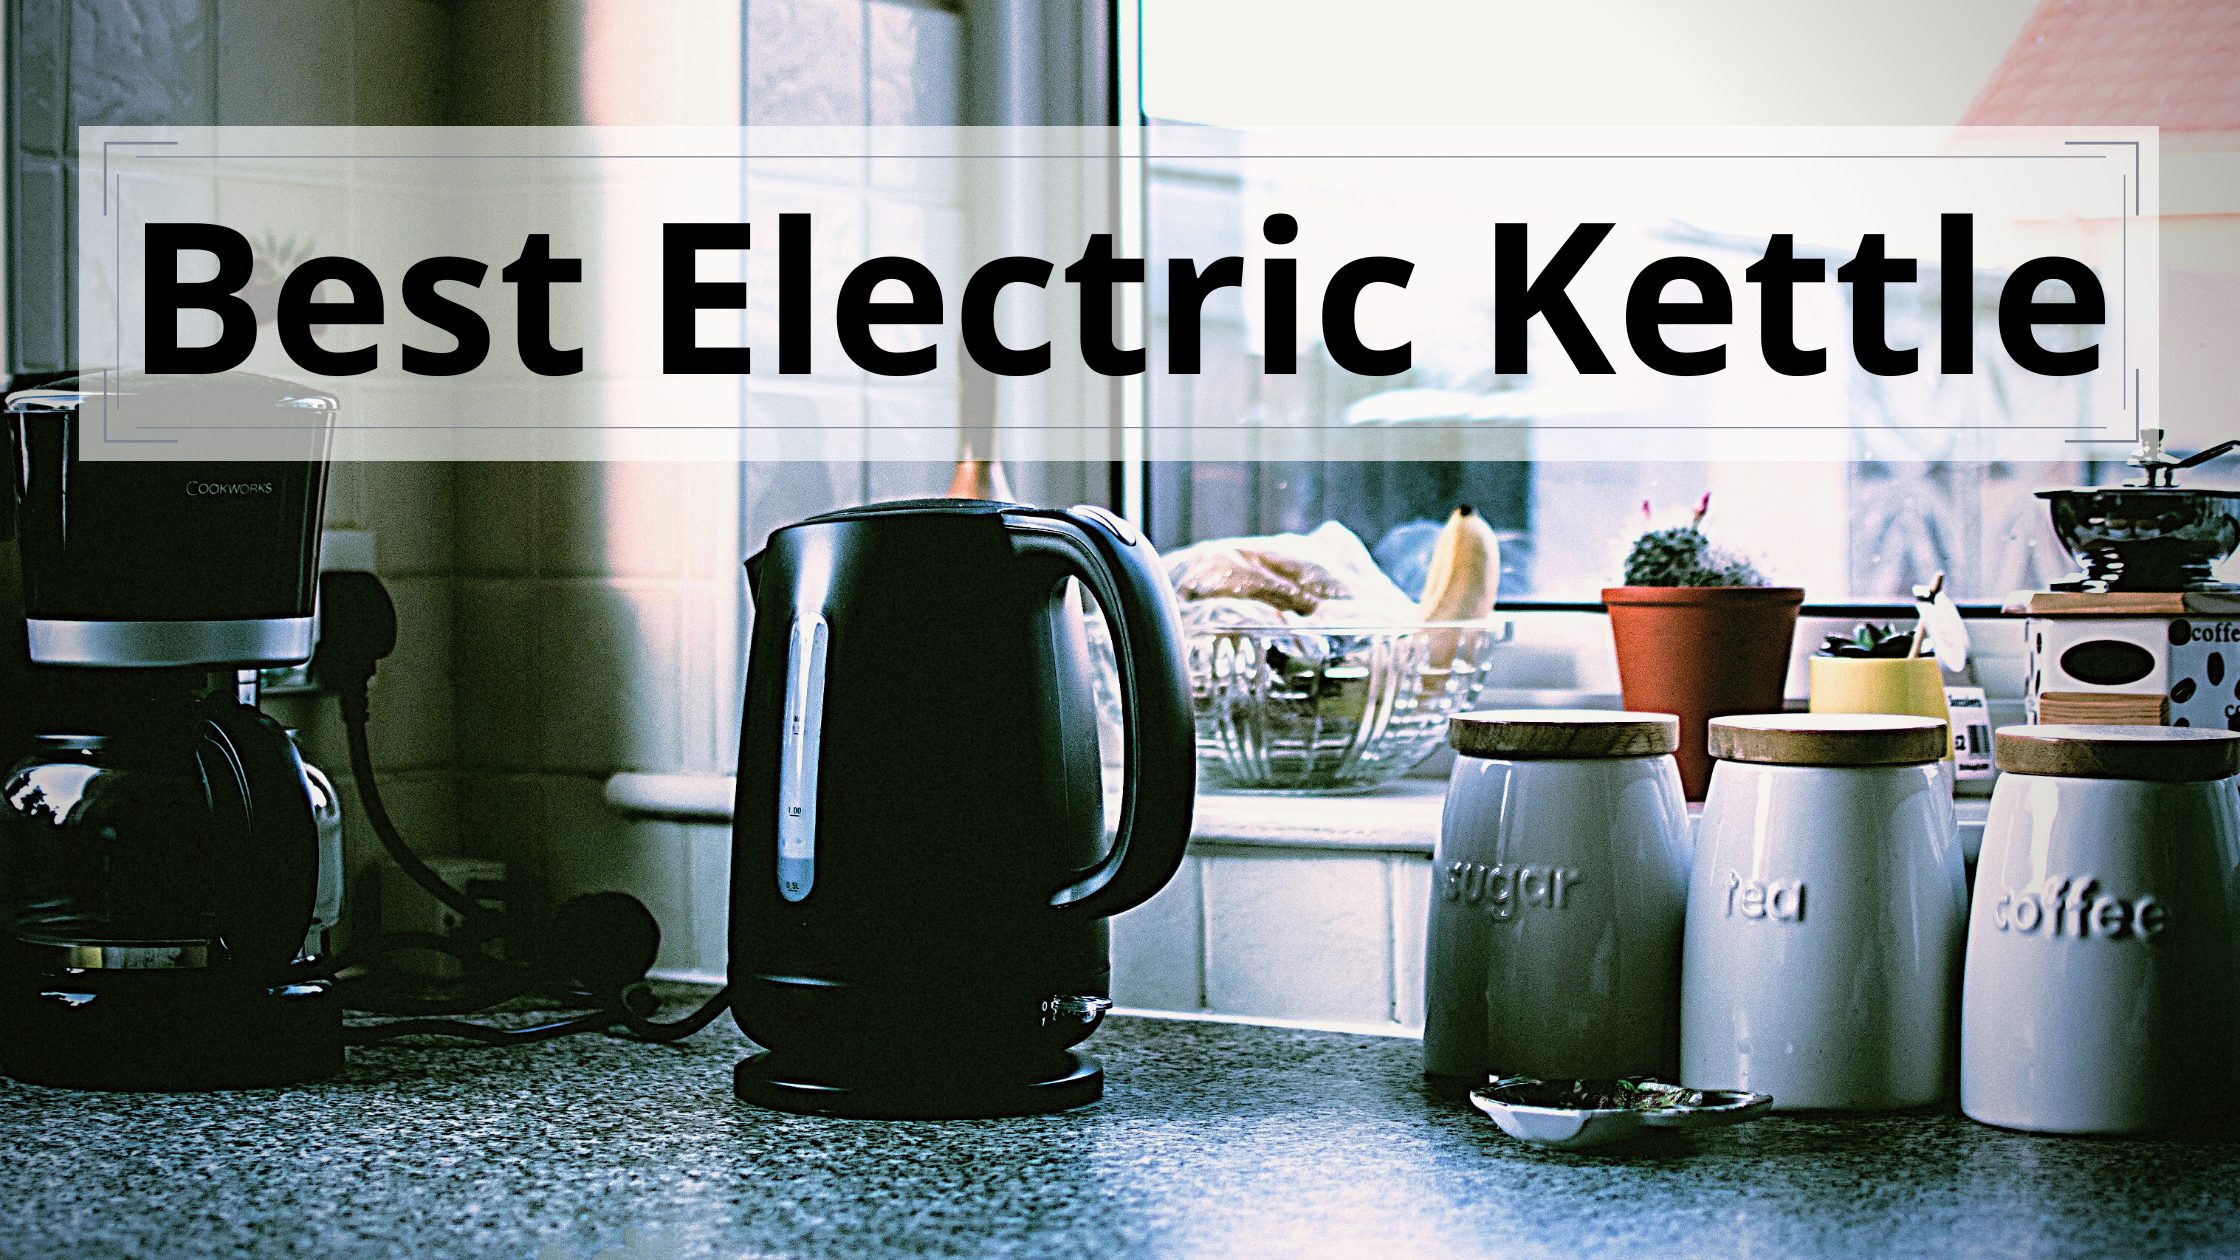 Greecho Electric Kettle Temperature Control, 1.7L Electric Tea Kettle